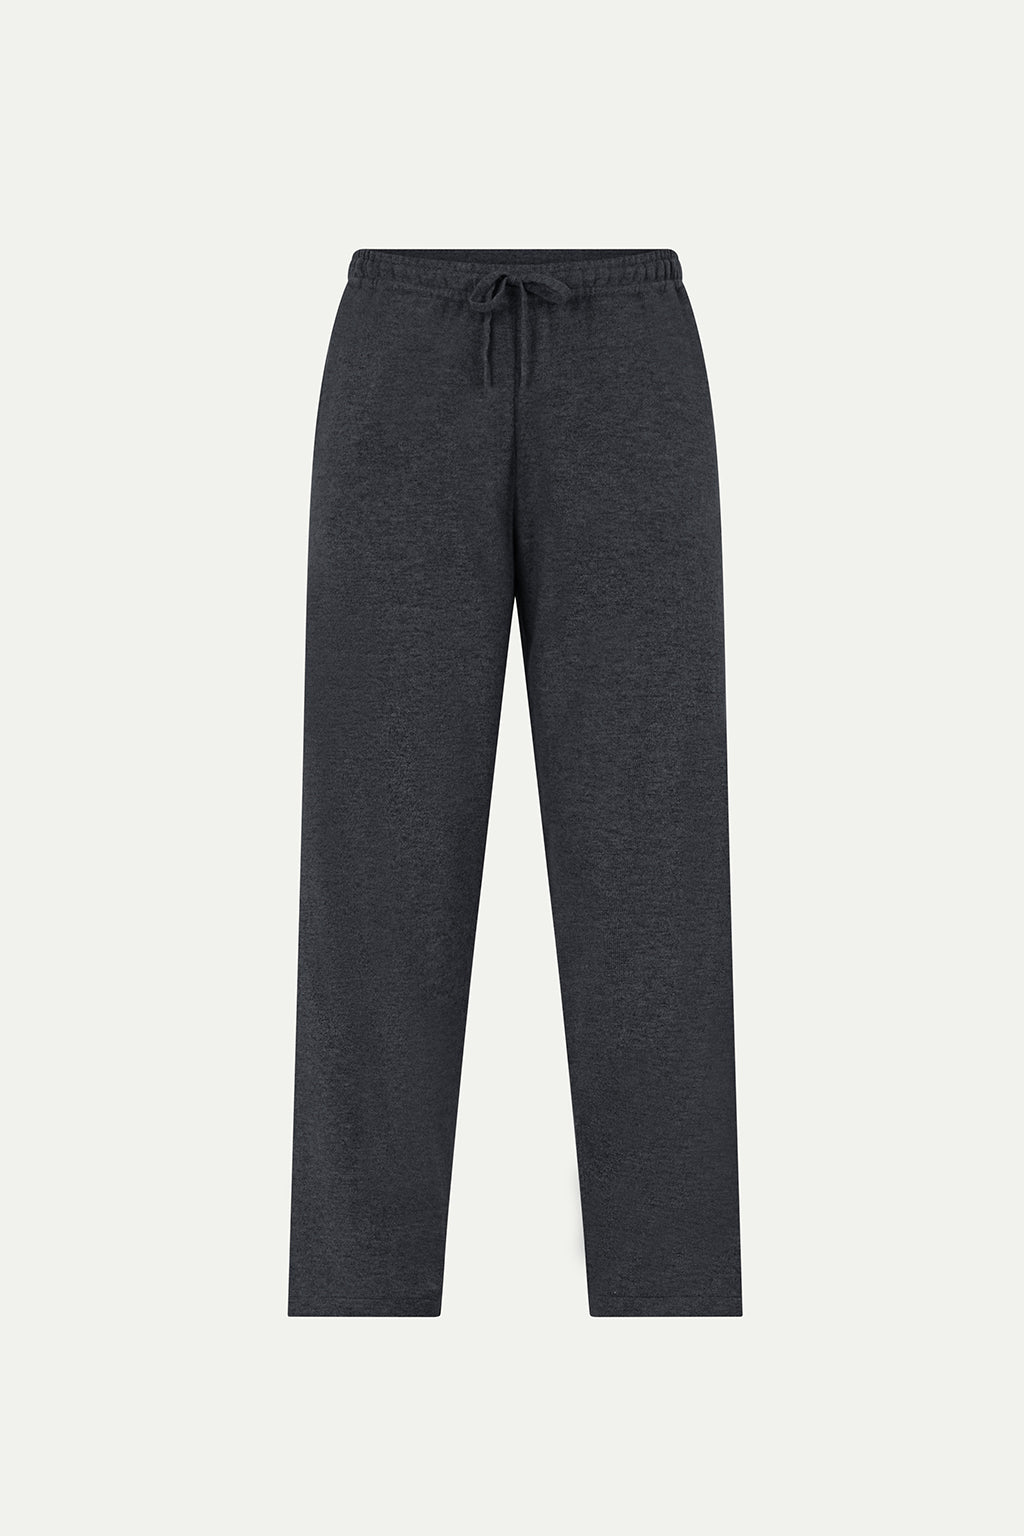 BALI cashmere pants (men)